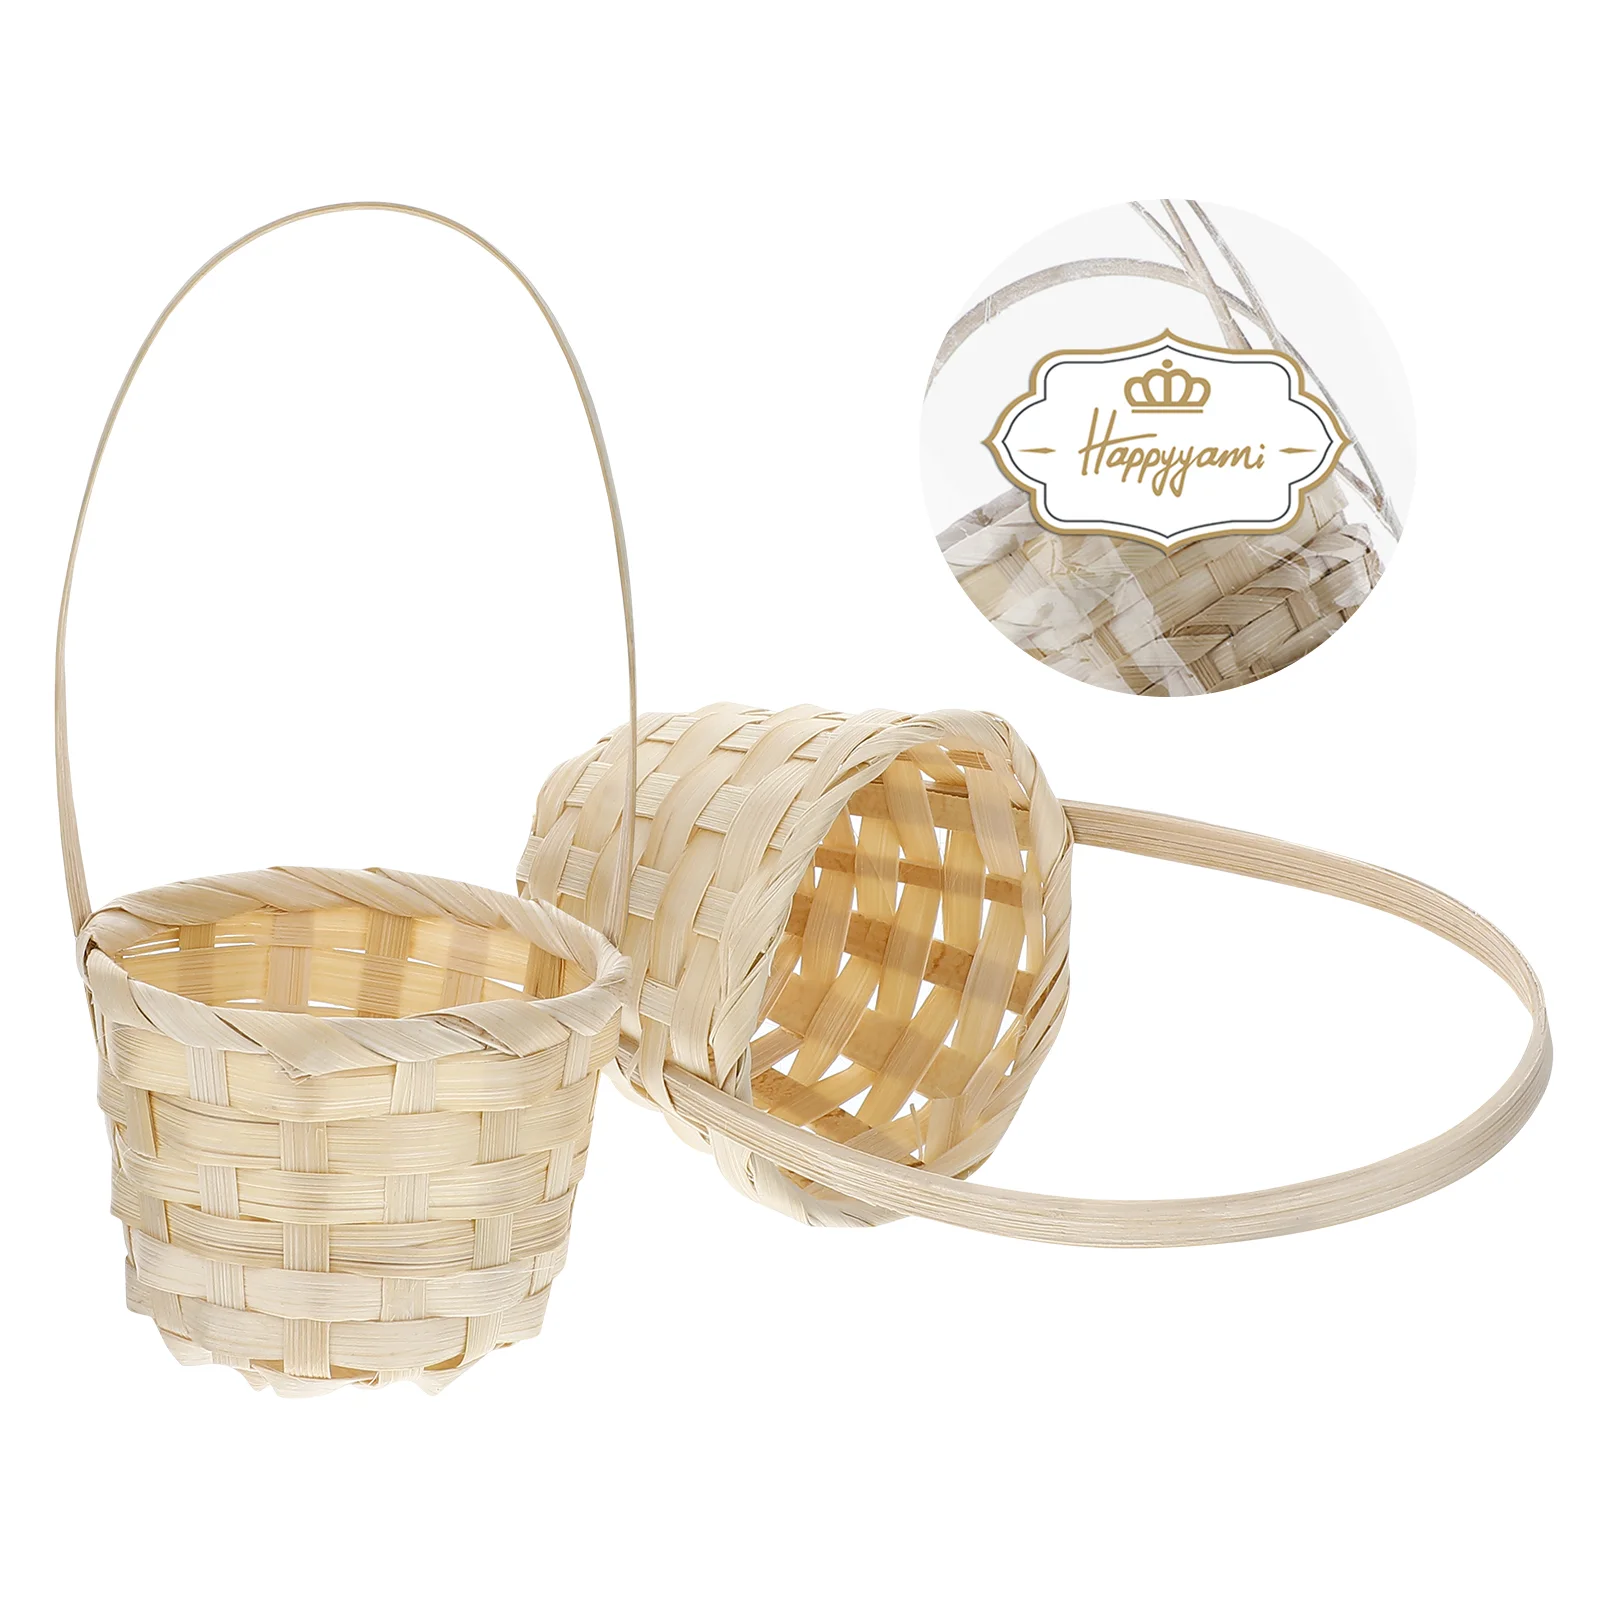 Fruit Holder Flower Basket Handle Bamboo Decorative Gift Baskets Empty Gifts Wicker Storage images - 6